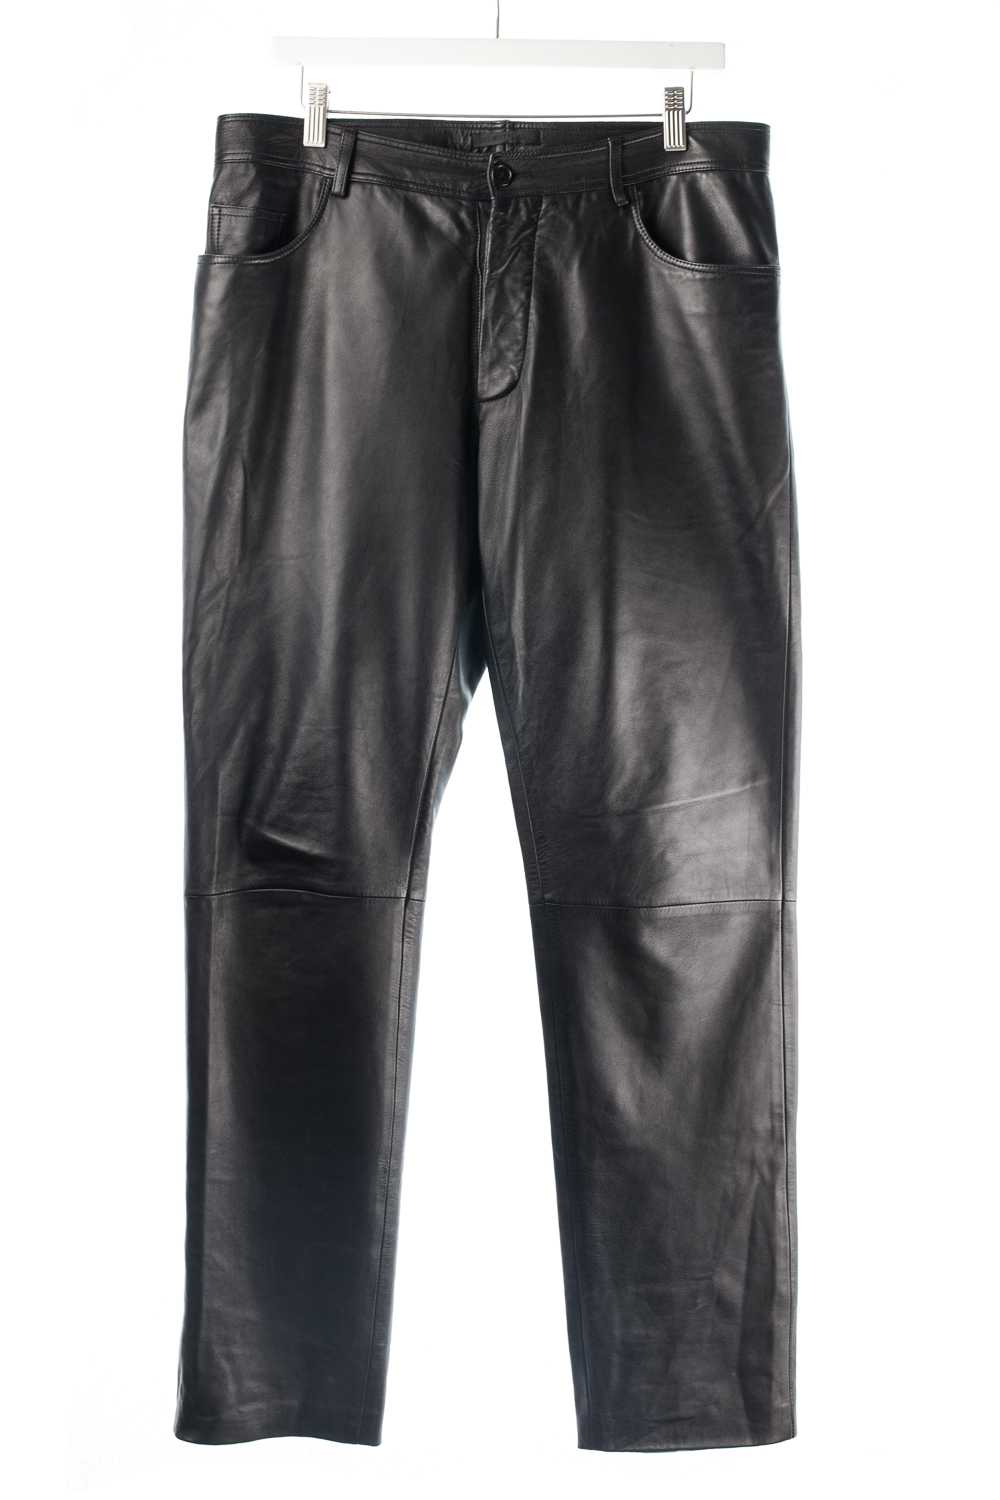 FW03 Calf Leather Pants - image 1